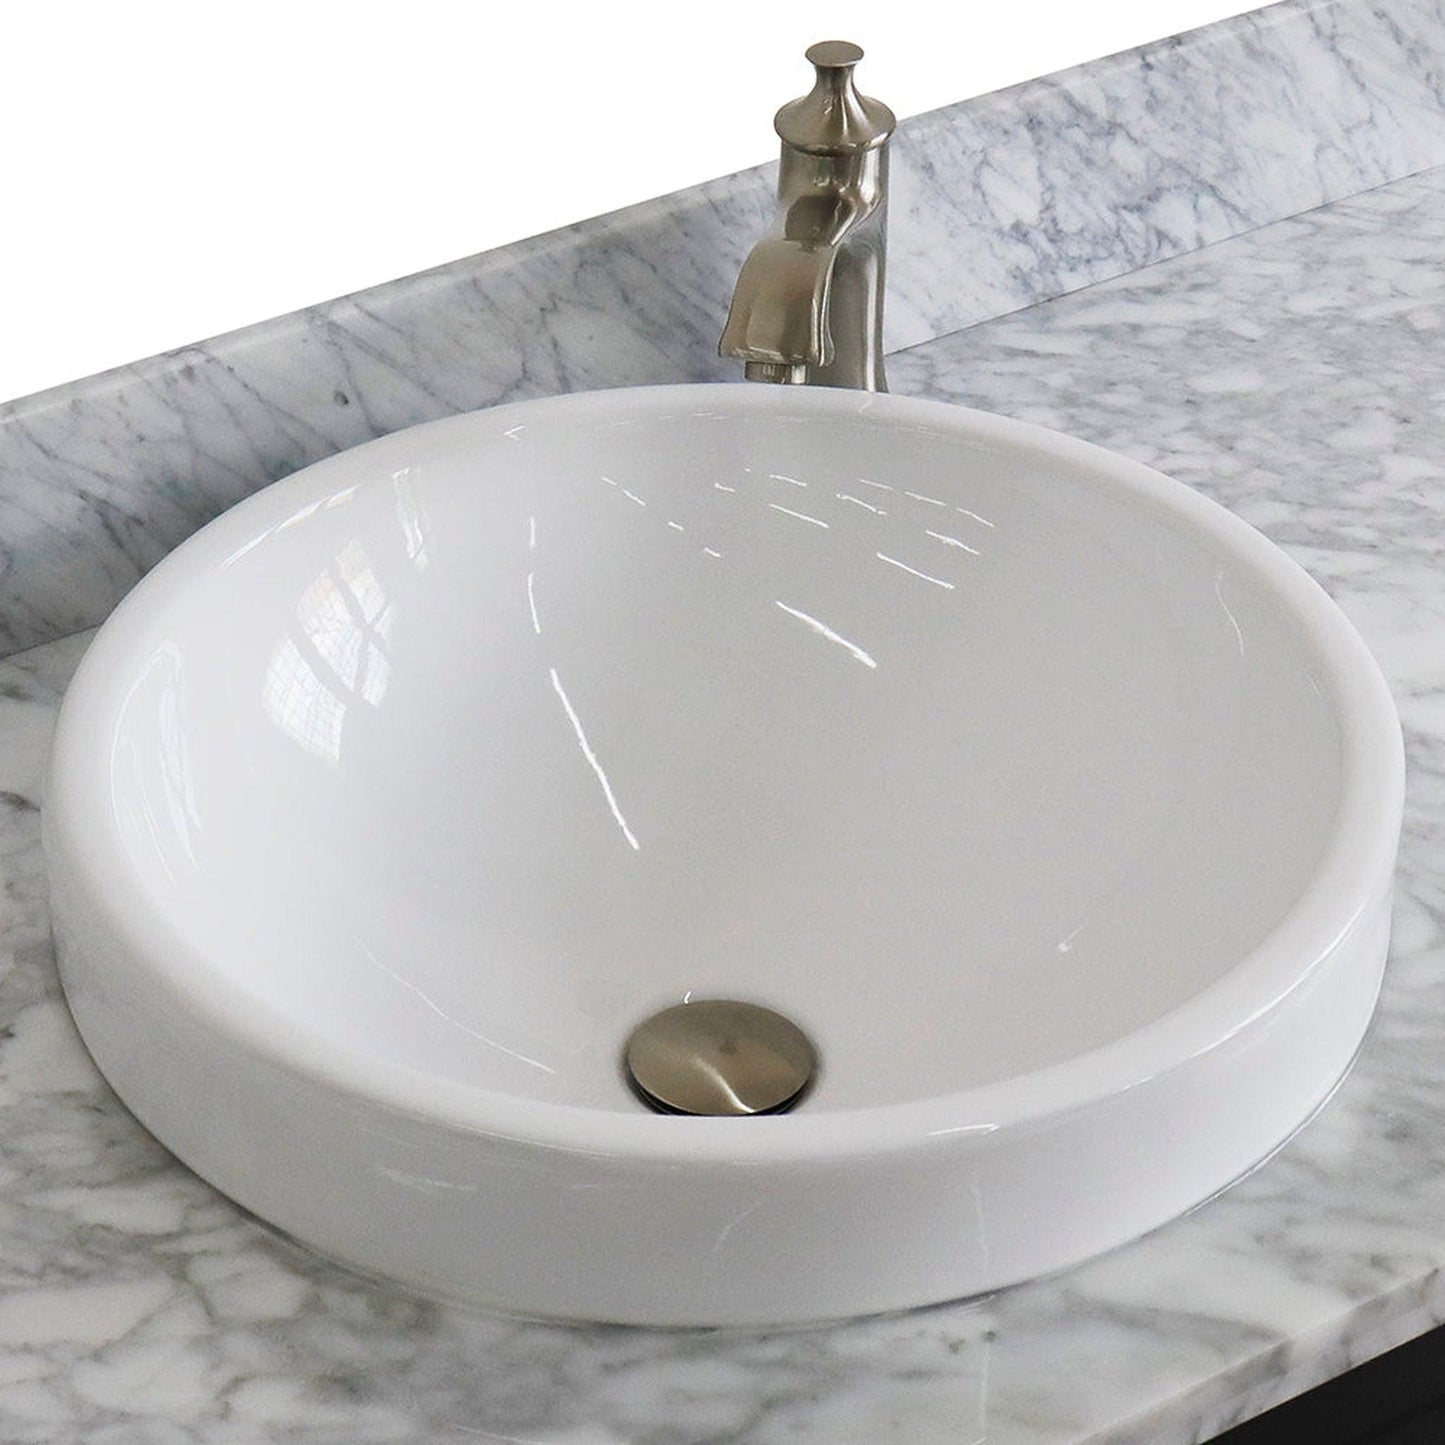 Bellaterra Home Terni 49" 2-Door 6-Drawer Dark Gray Freestanding Vanity Set With Ceramic Vessel Sink and White Carrara Marble Top